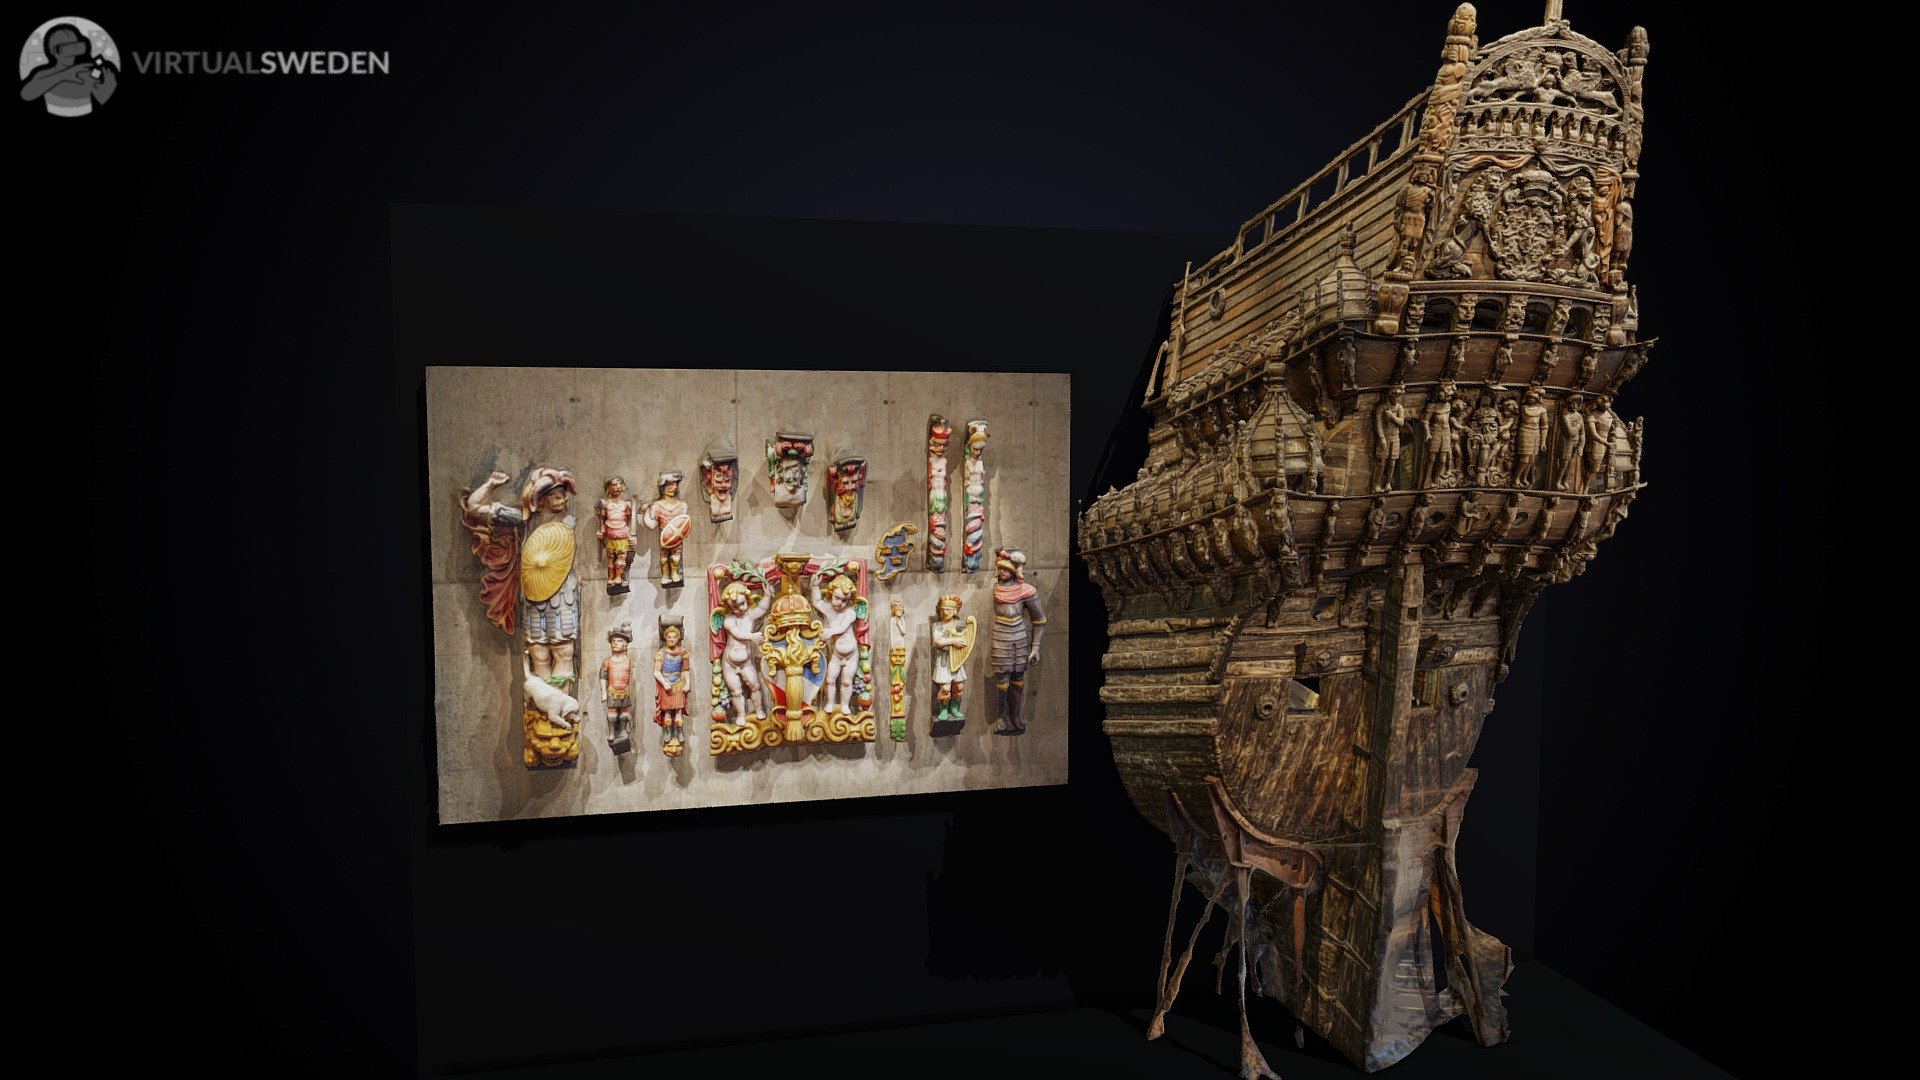 Sculptures of the Vasa warship